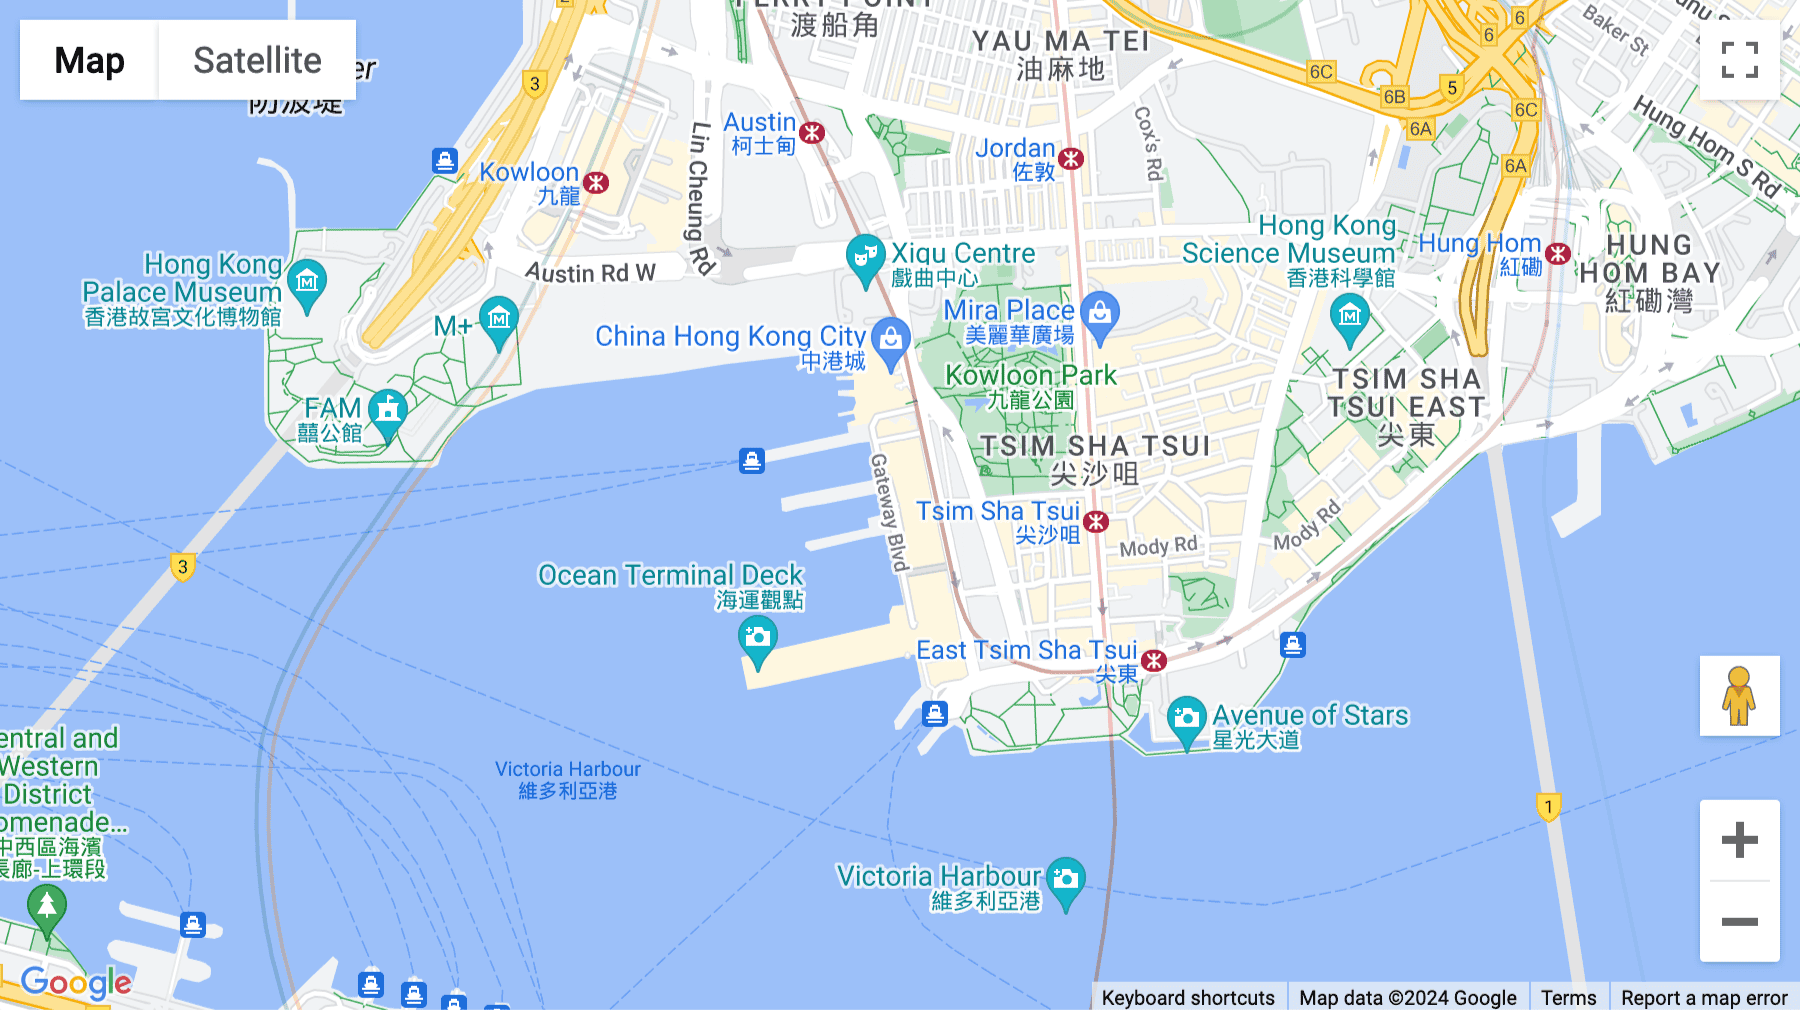 Click for interative map of 29th and 30th floor, The Gateway Tower 5, 15 Canton road, Tsim sha Tsui, Hong Kong